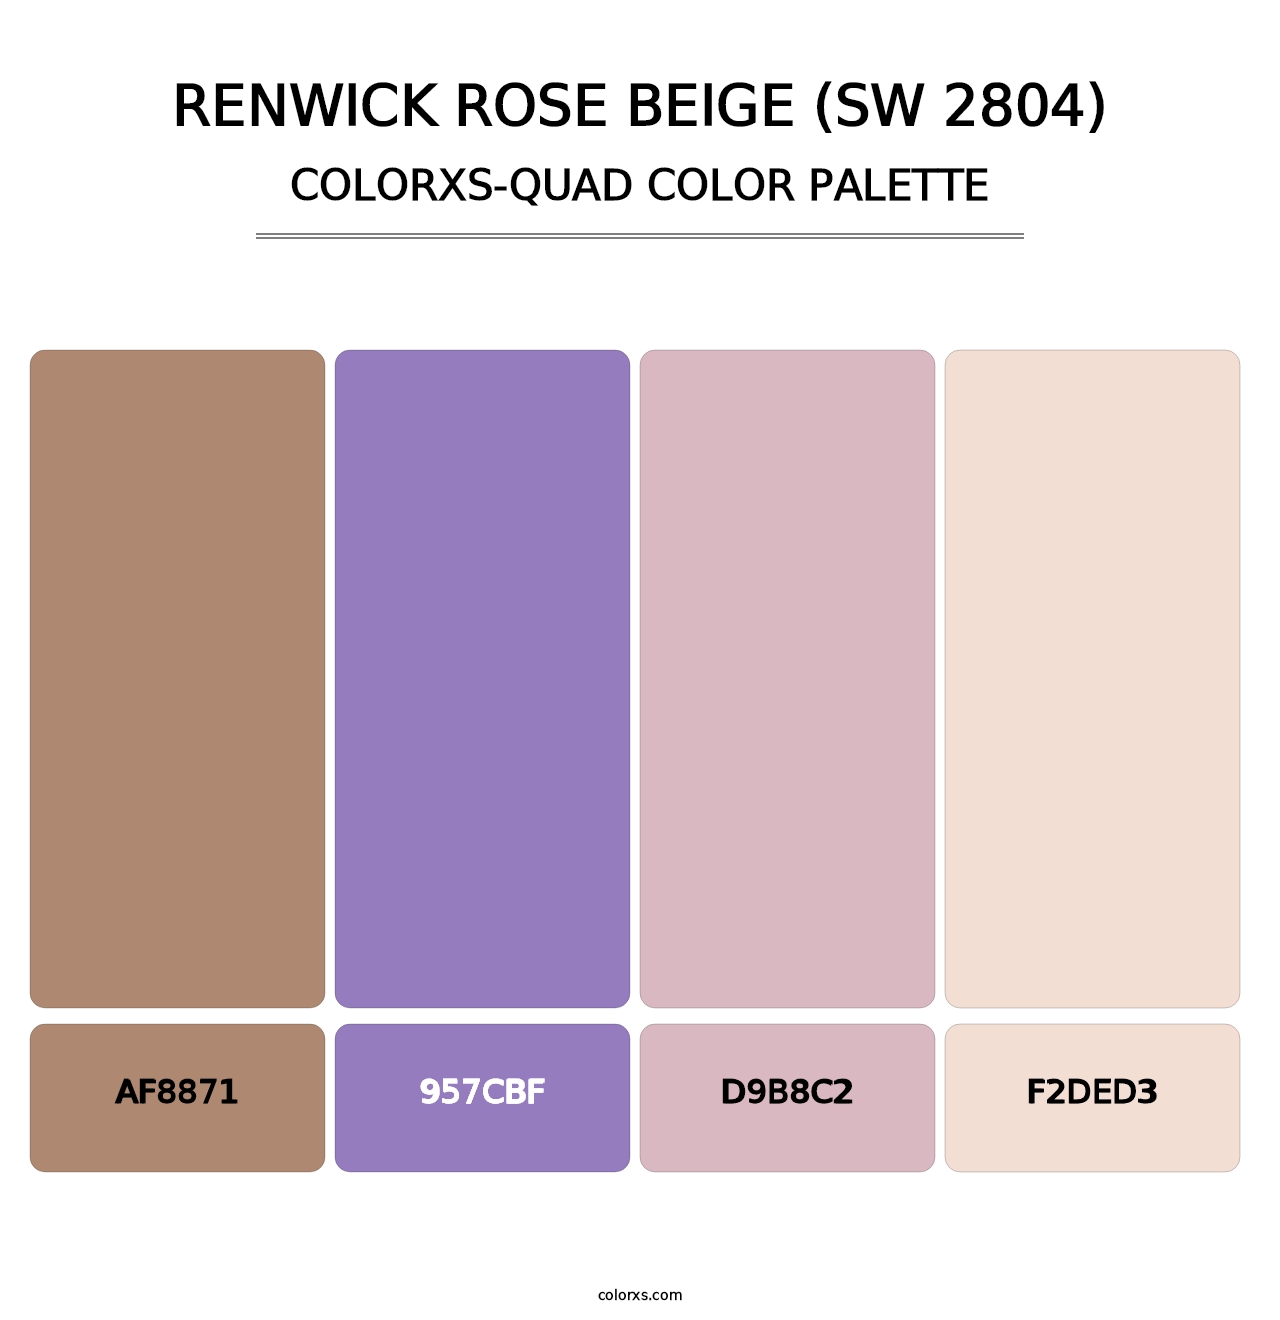 Renwick Rose Beige (SW 2804) - Colorxs Quad Palette